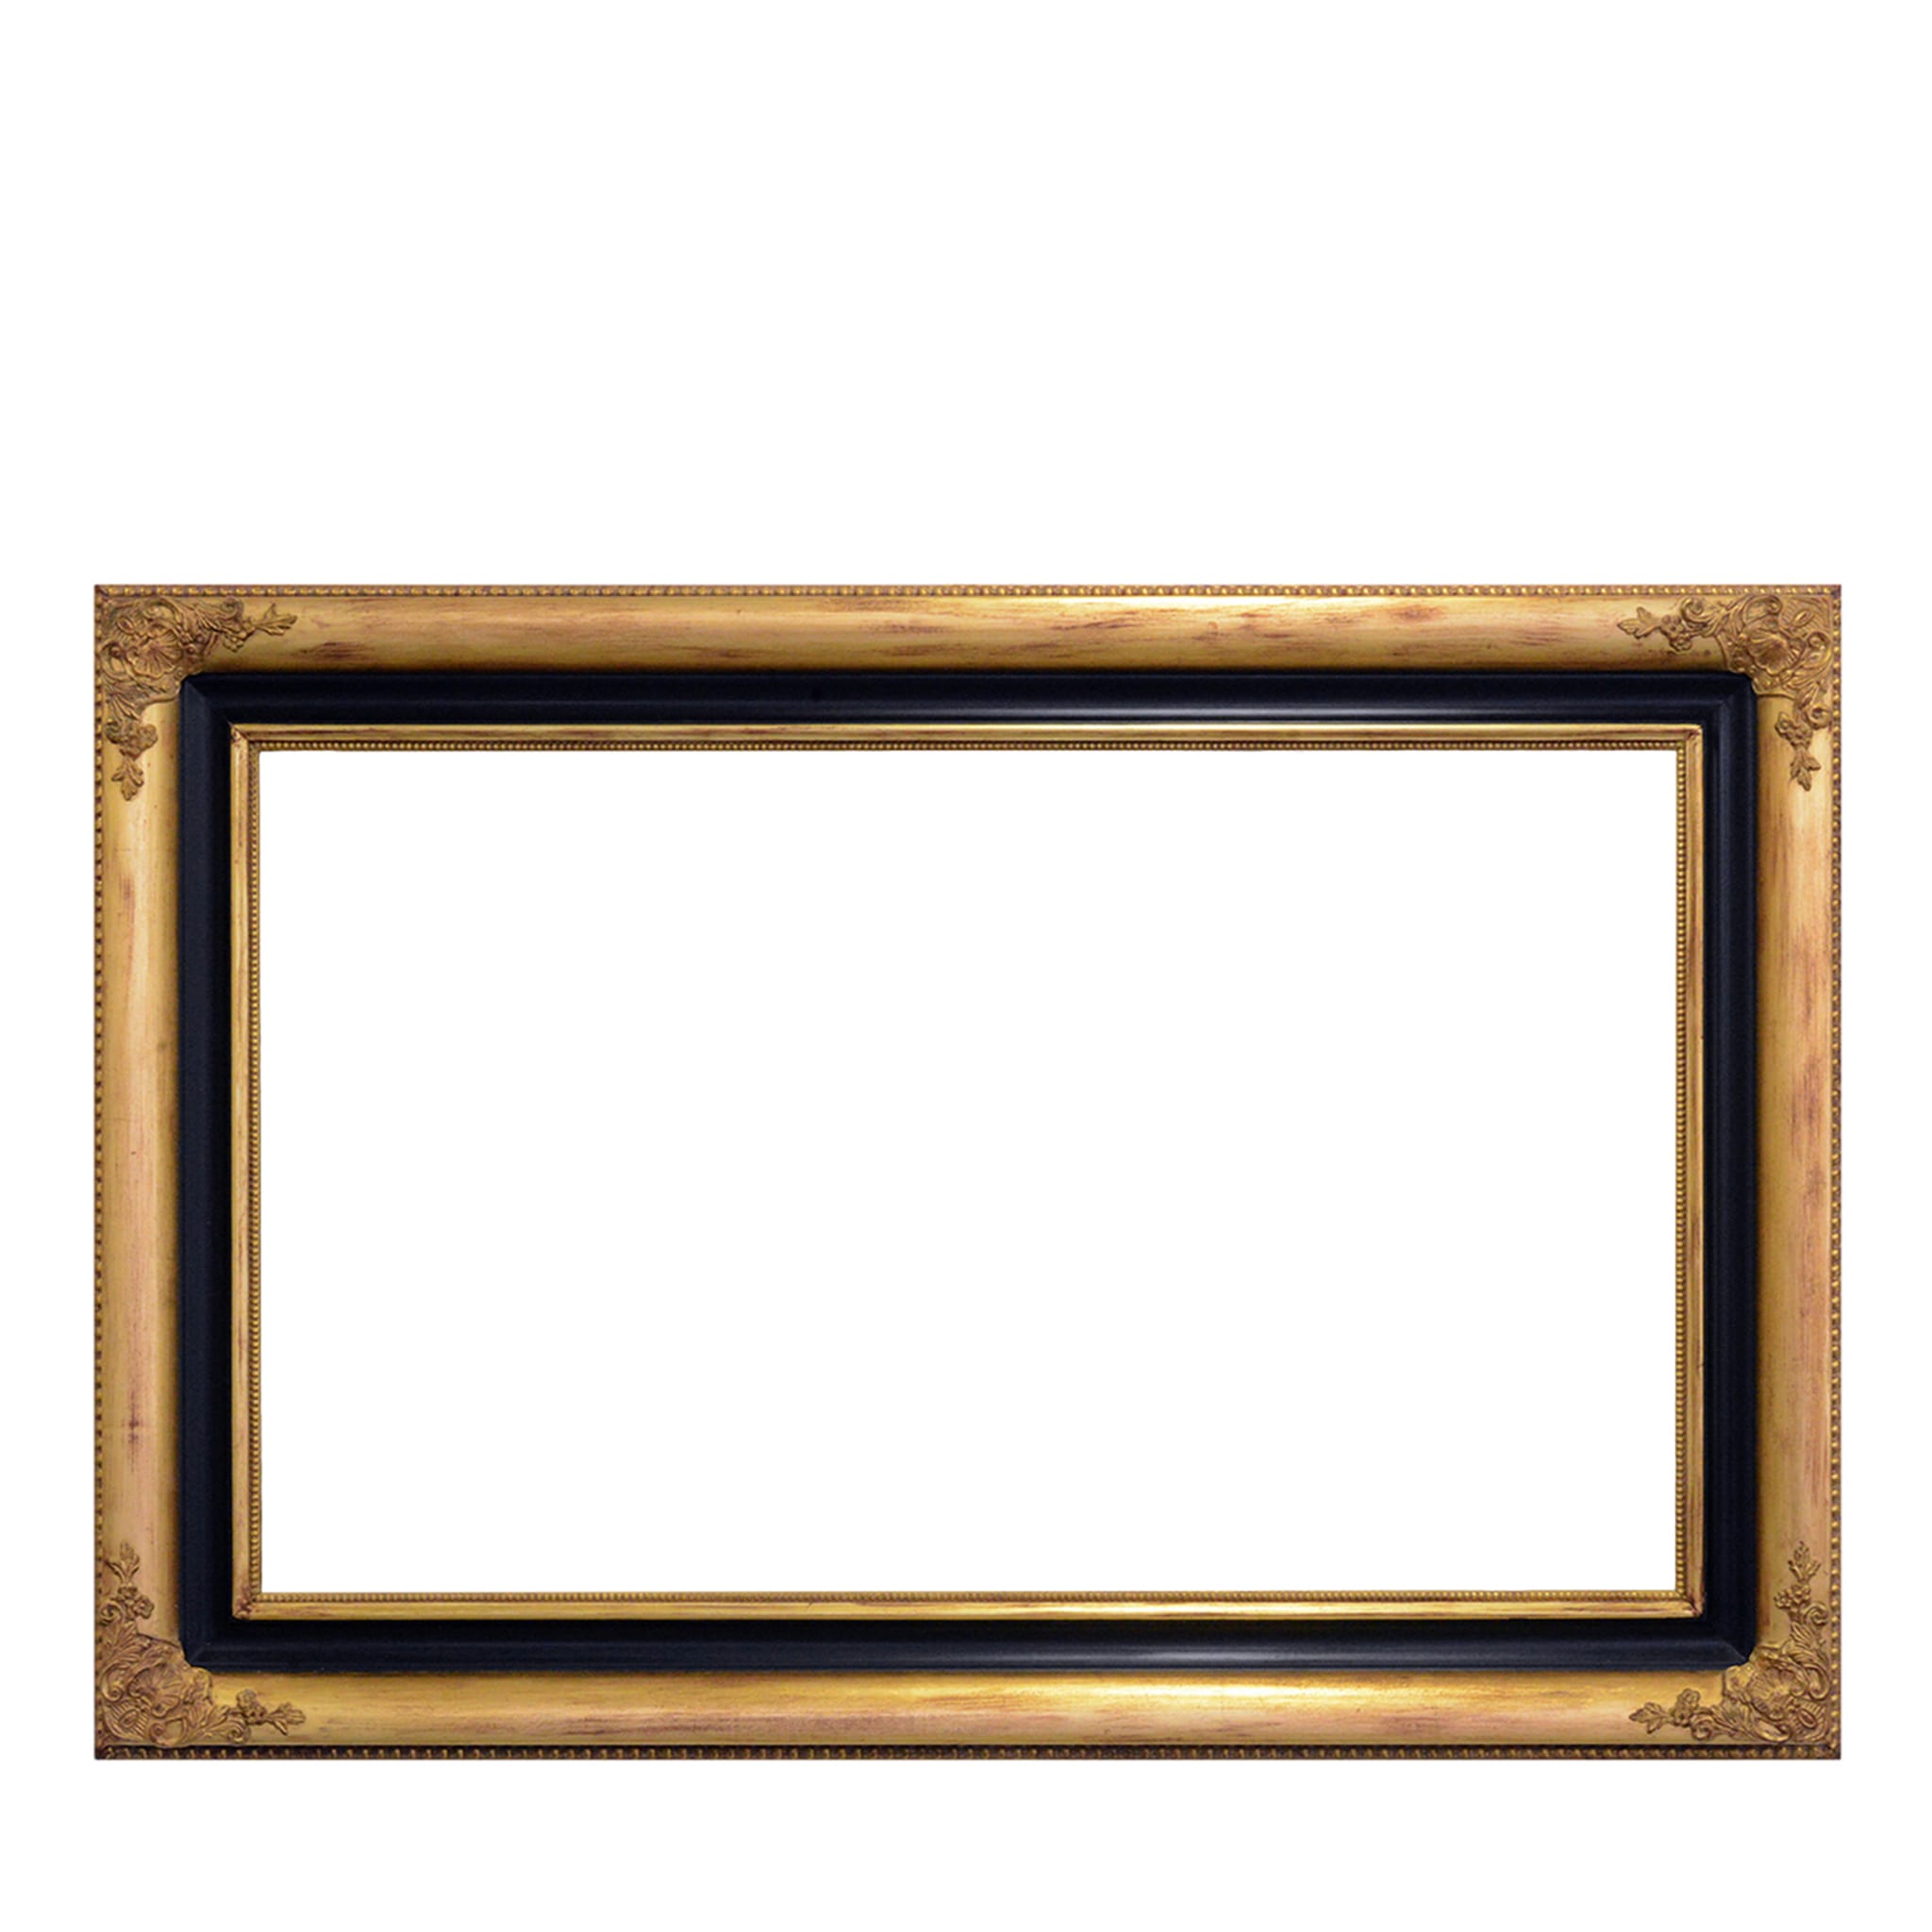 Salvator Rosa Frame #2 - Main view